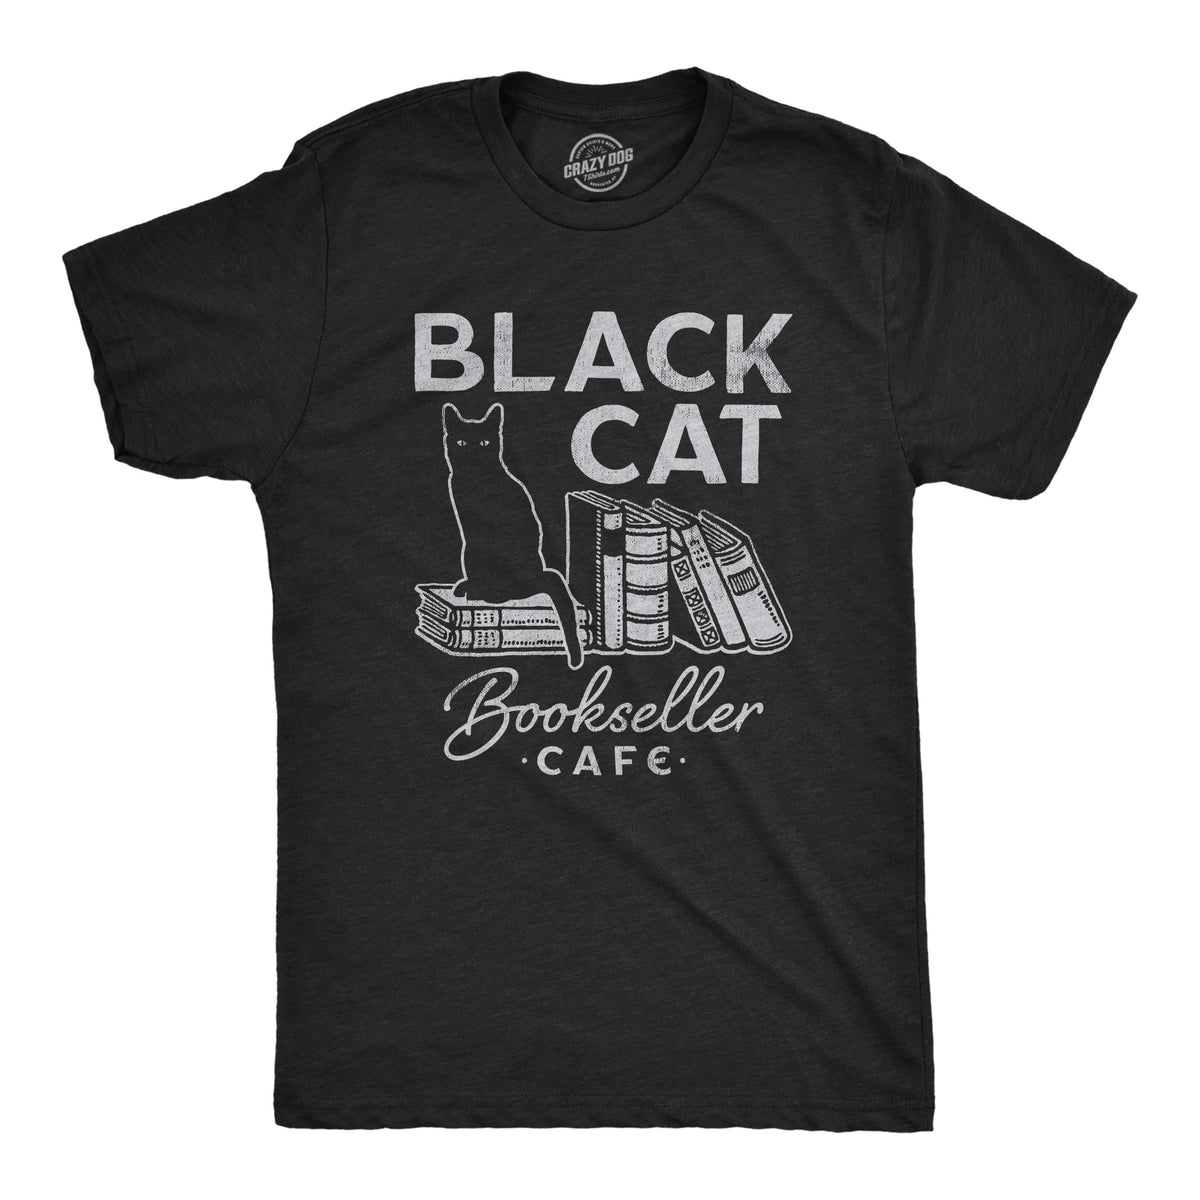 Funny Heather Black - Bookseller Black Cat Bookseller Cafe Mens T Shirt Nerdy Halloween Cat Tee